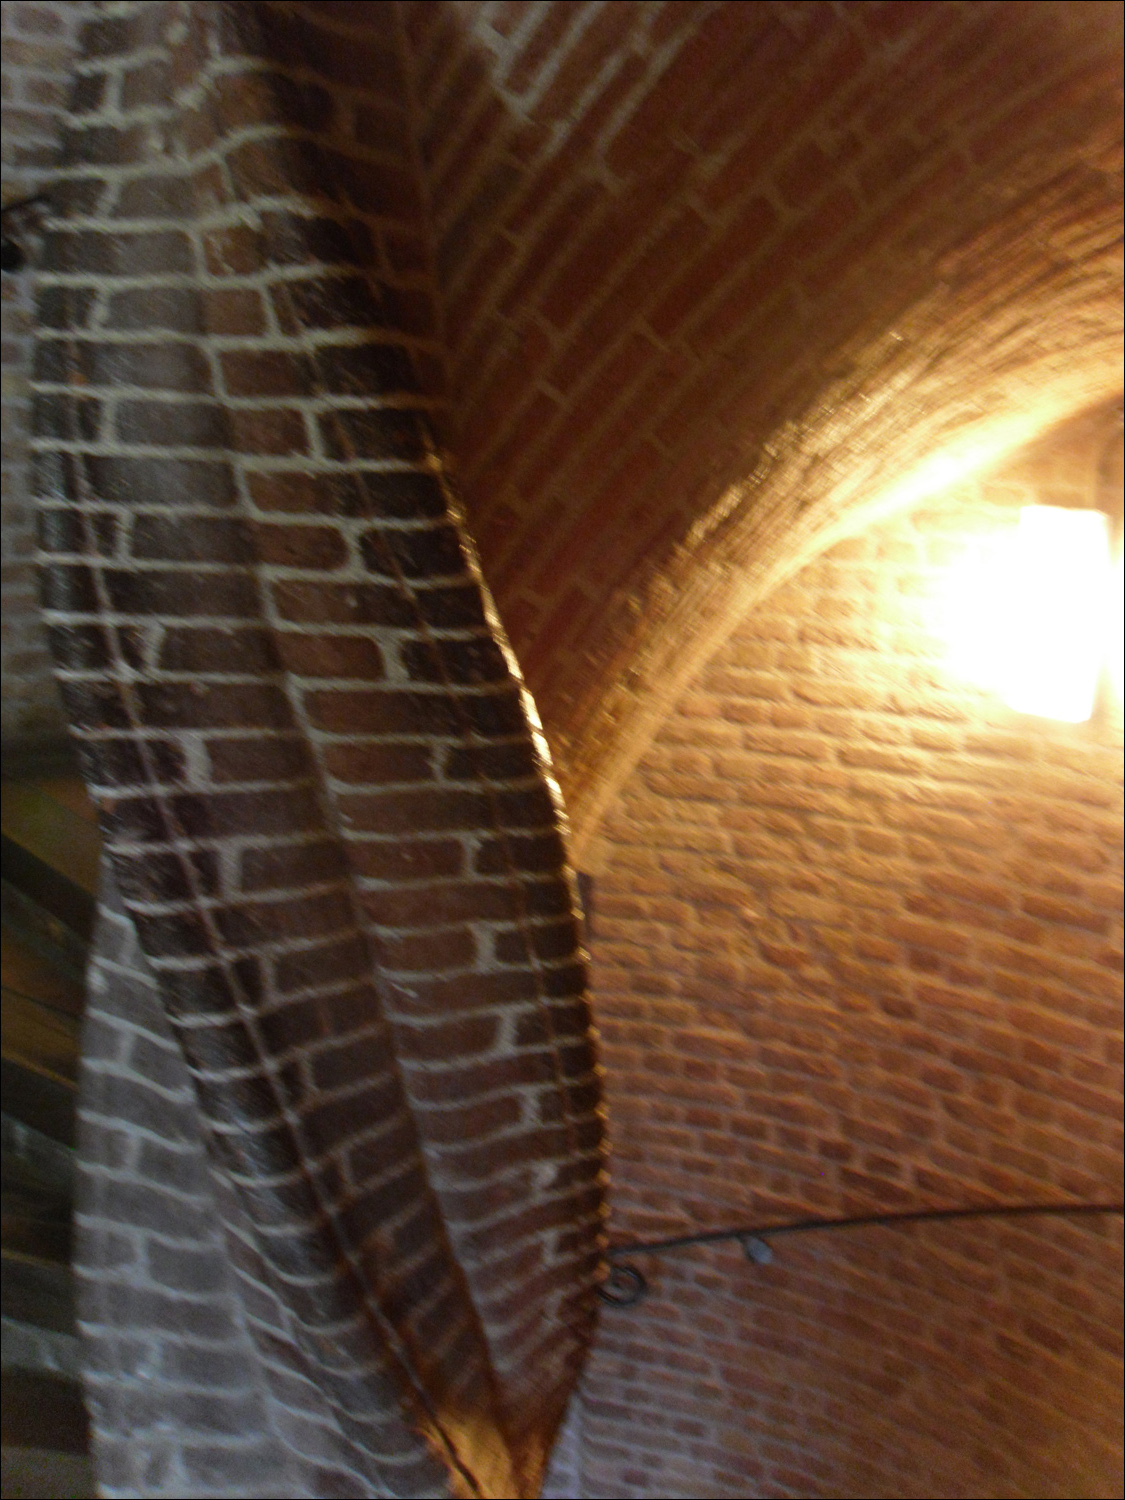 Spiral stair well inside Prinsenhof